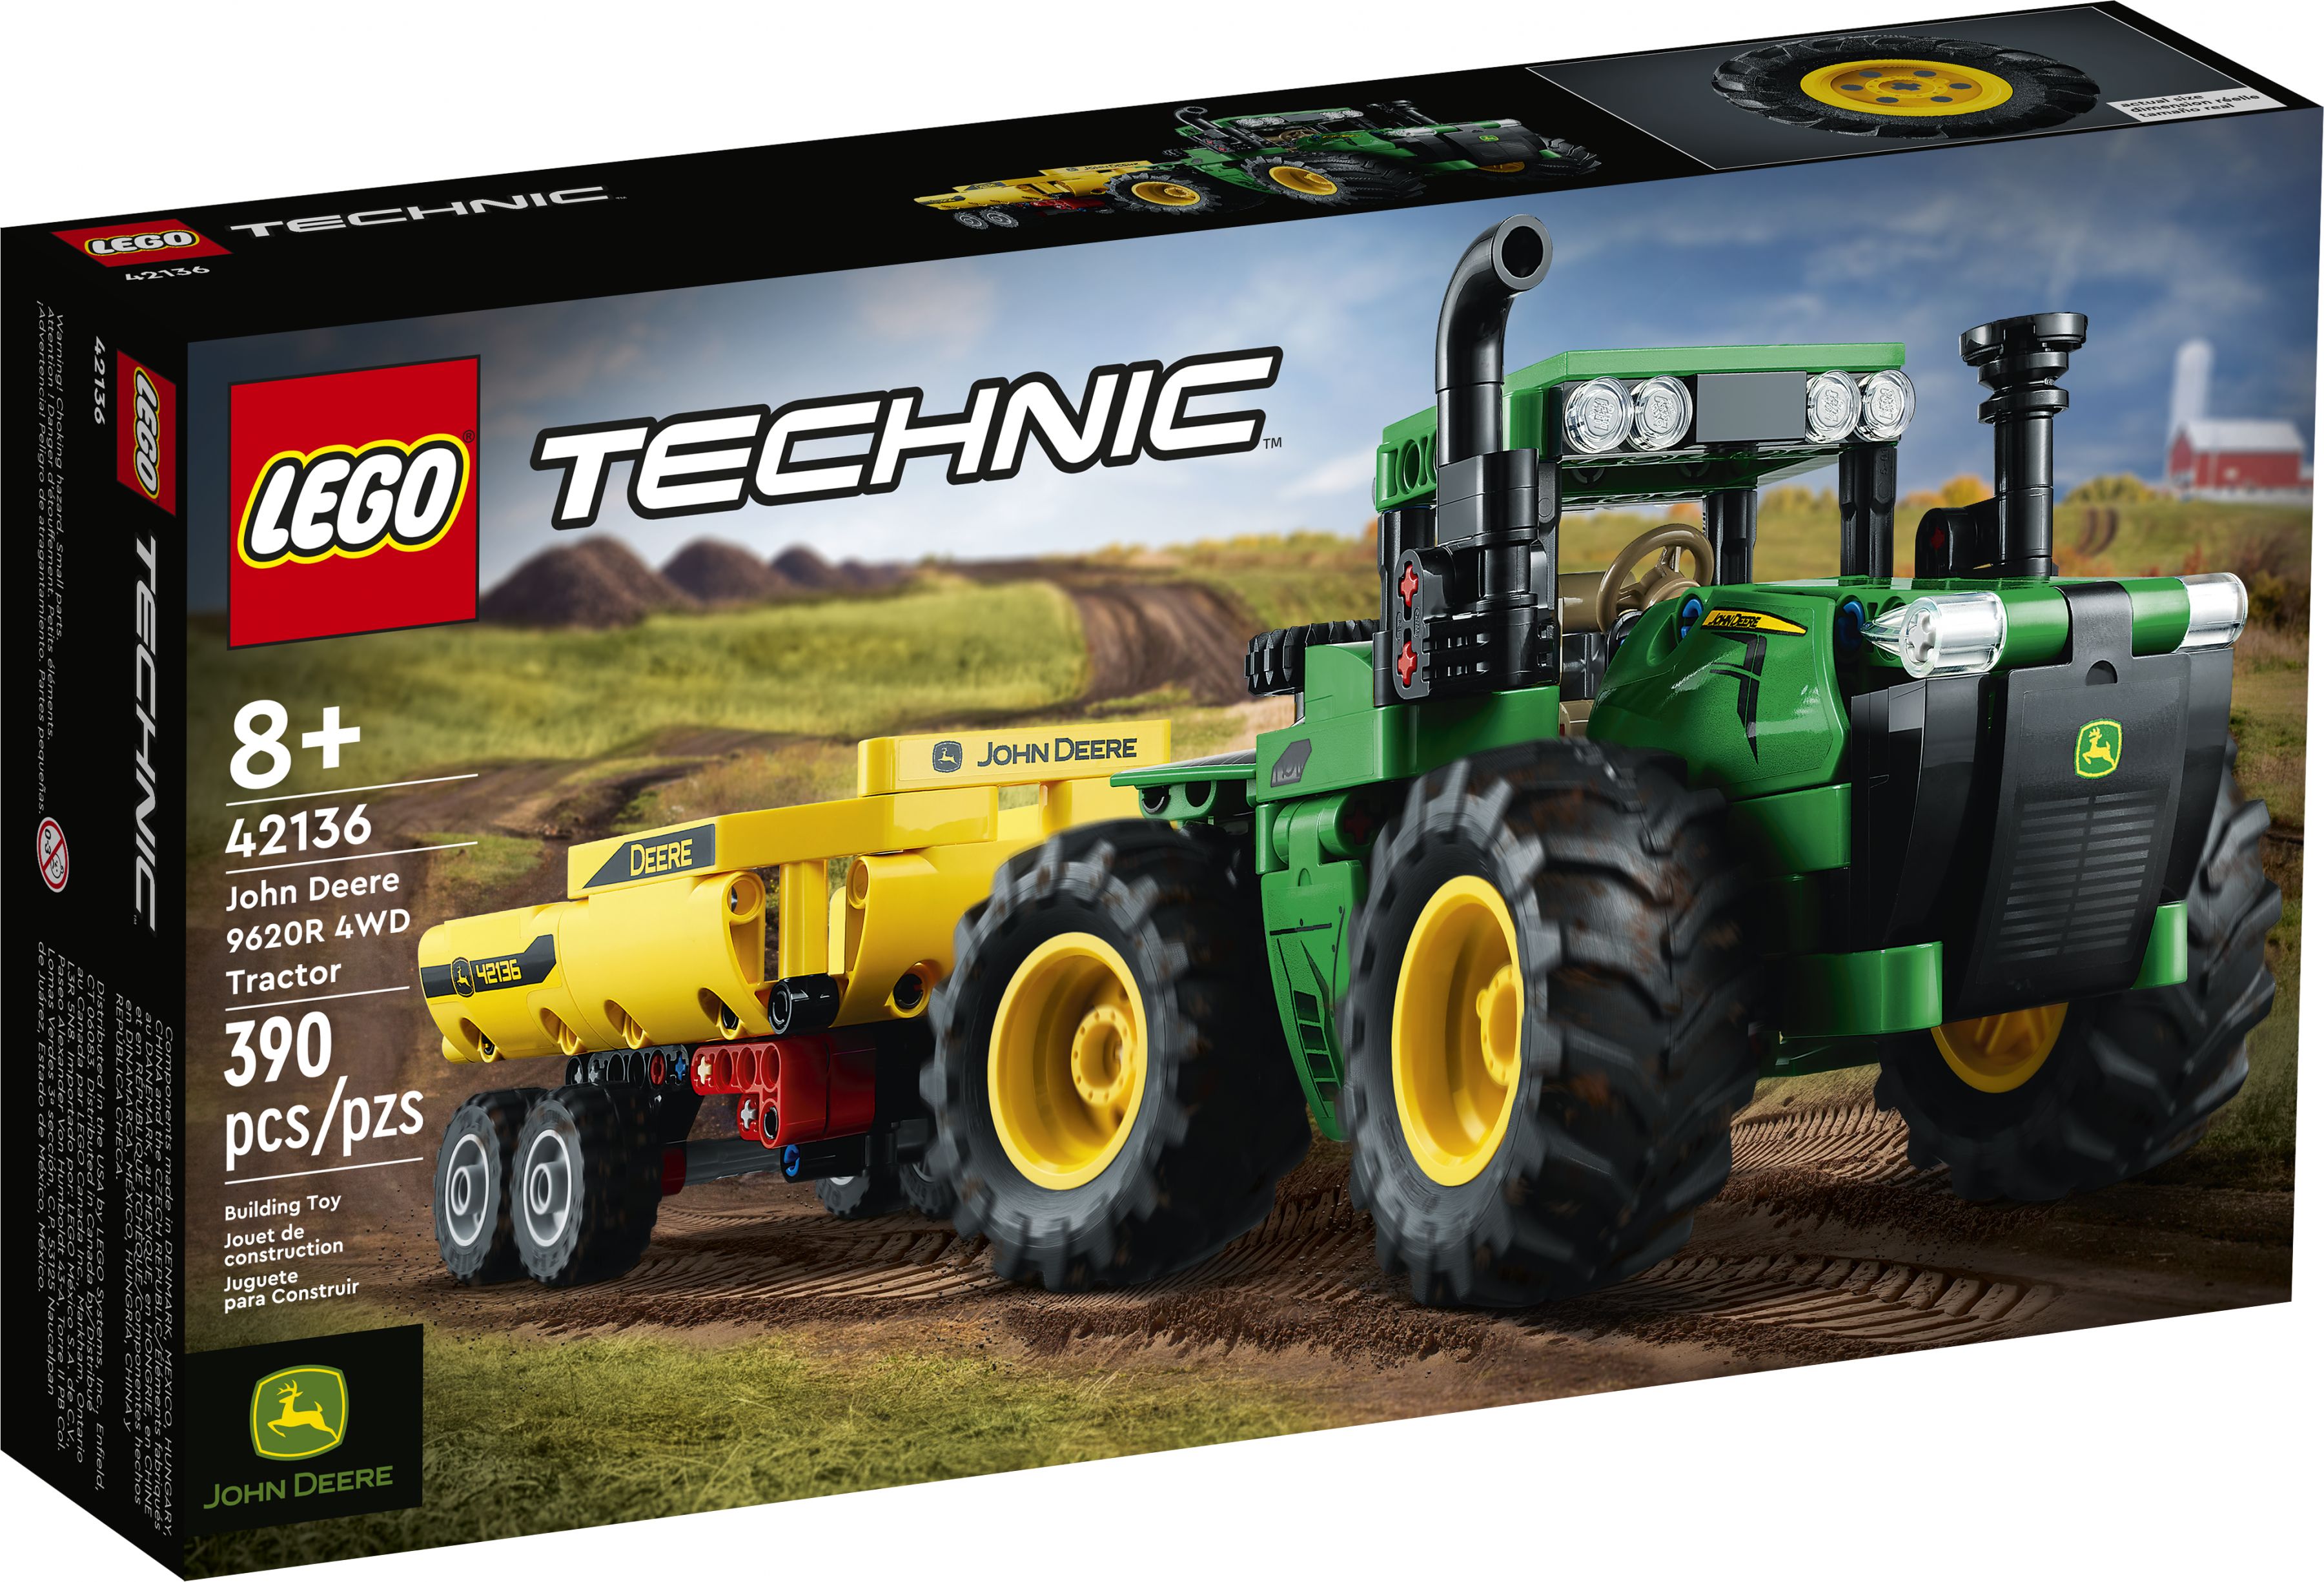 LEGO Technic 42136 John Deere 9620R 4WD Tractor LEGO_42136_Box1_v39.jpg